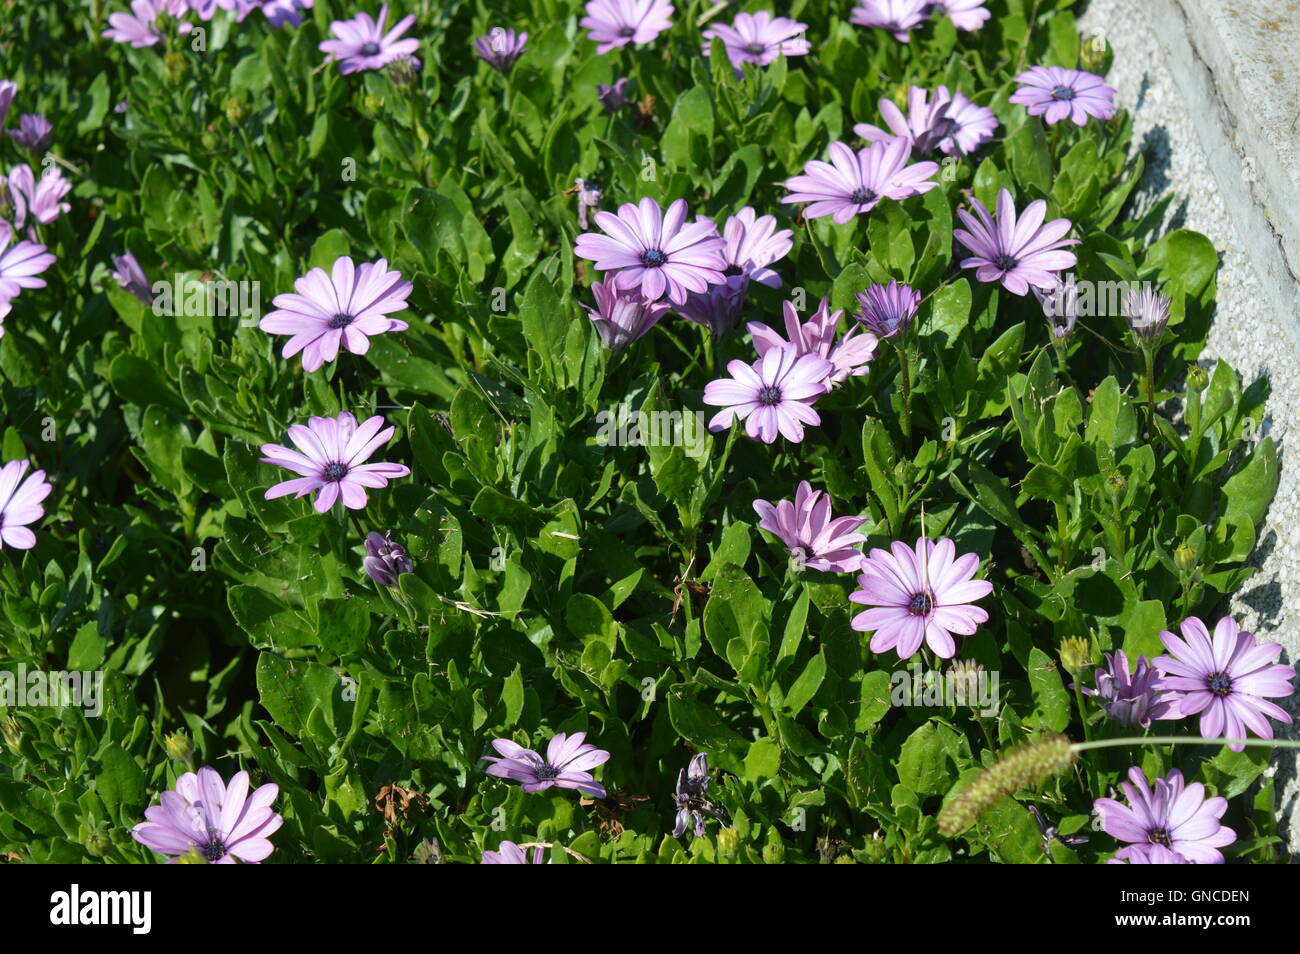 Purple daisies in a garden Stock Photo